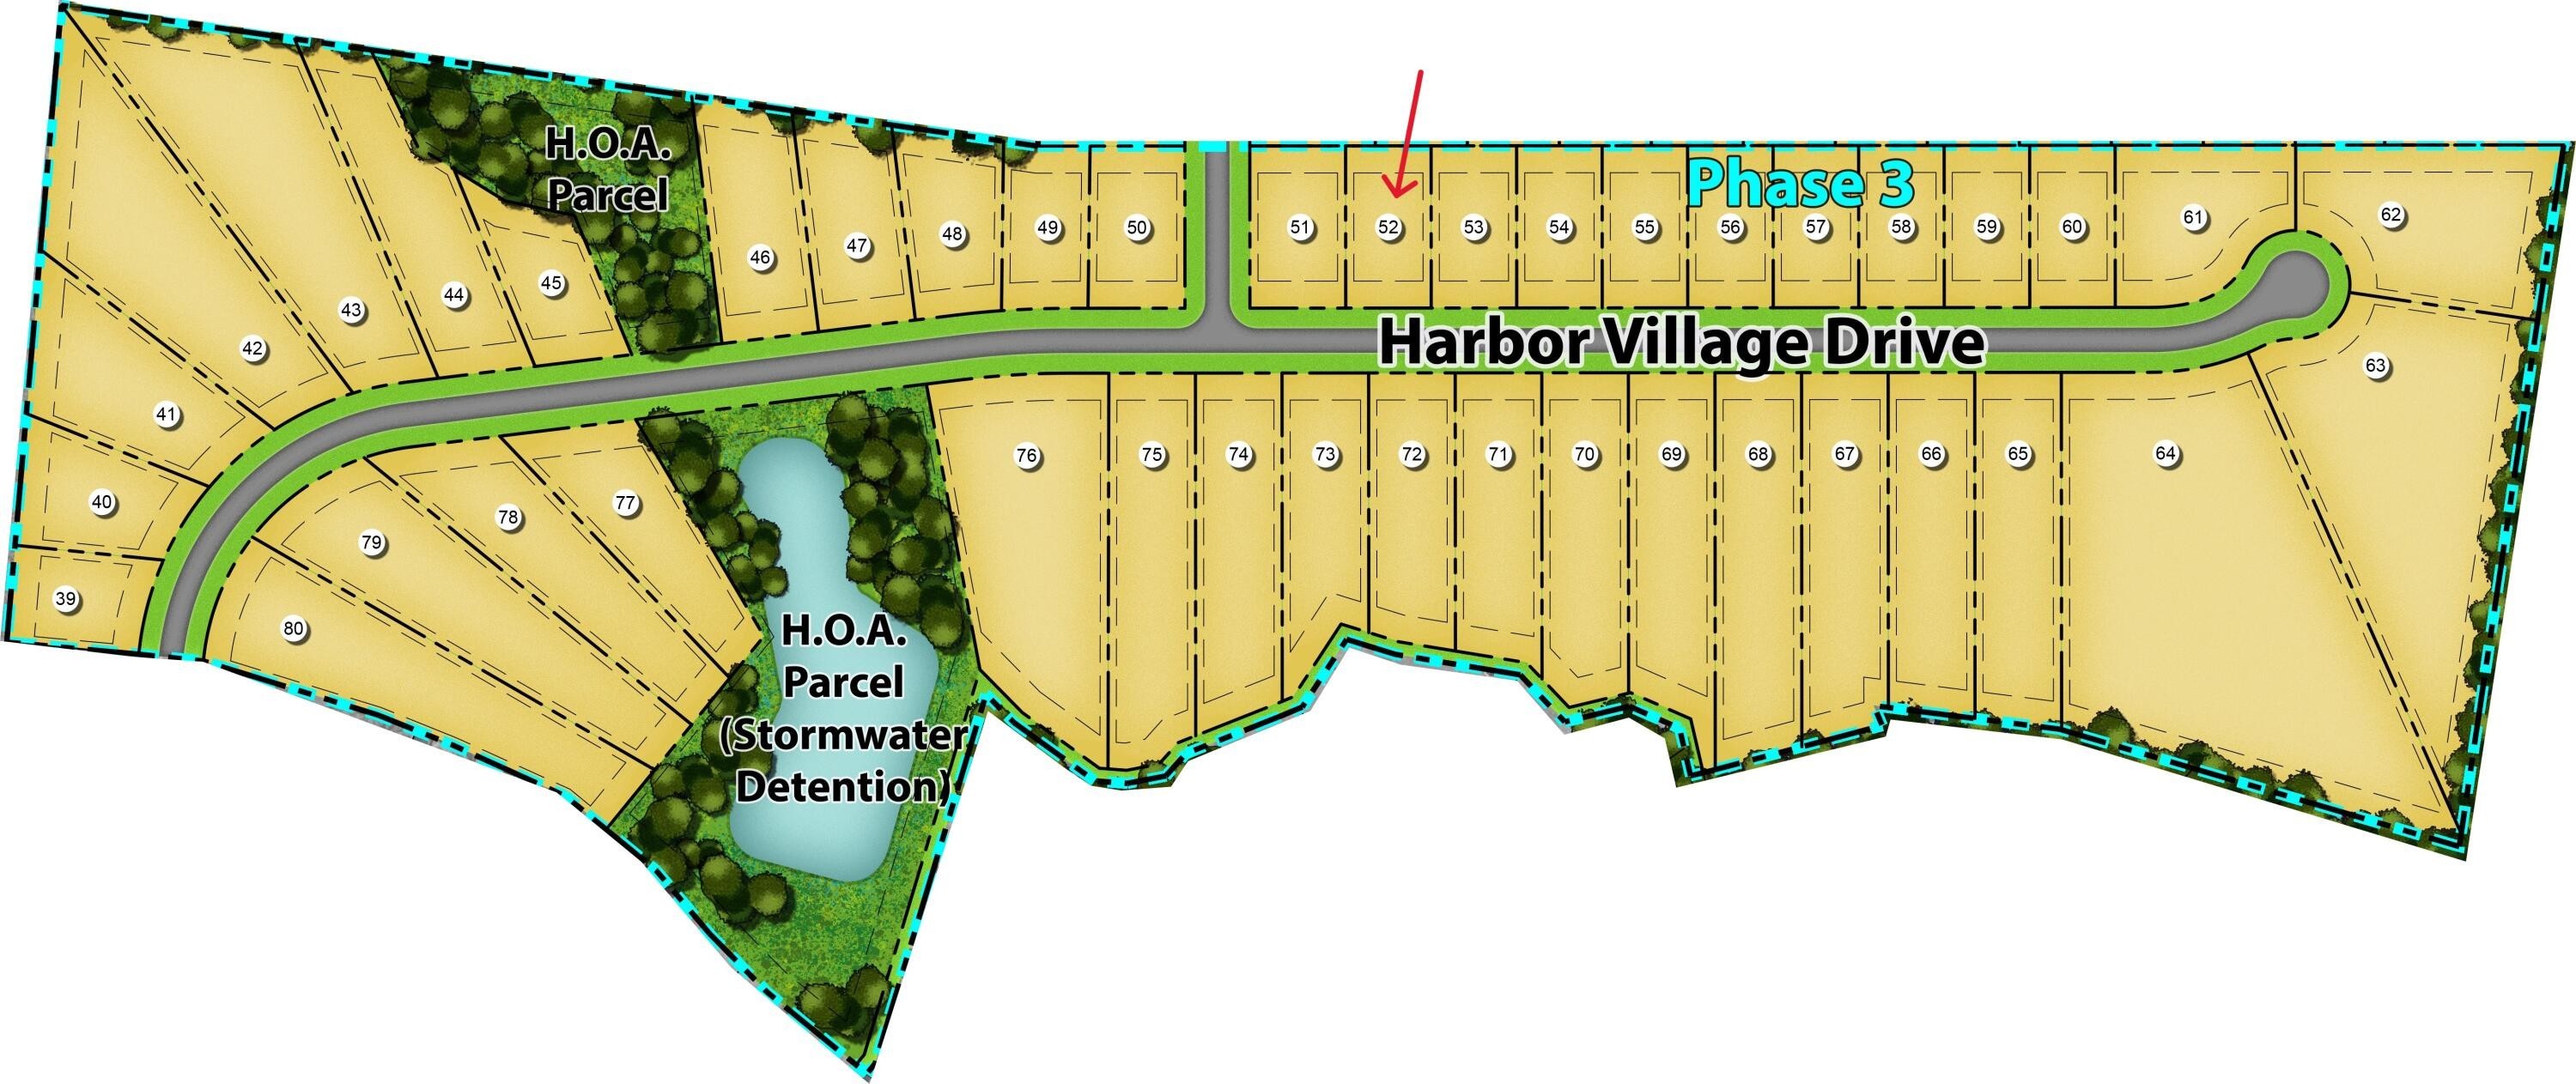 6. 268 Harbor Village Drive